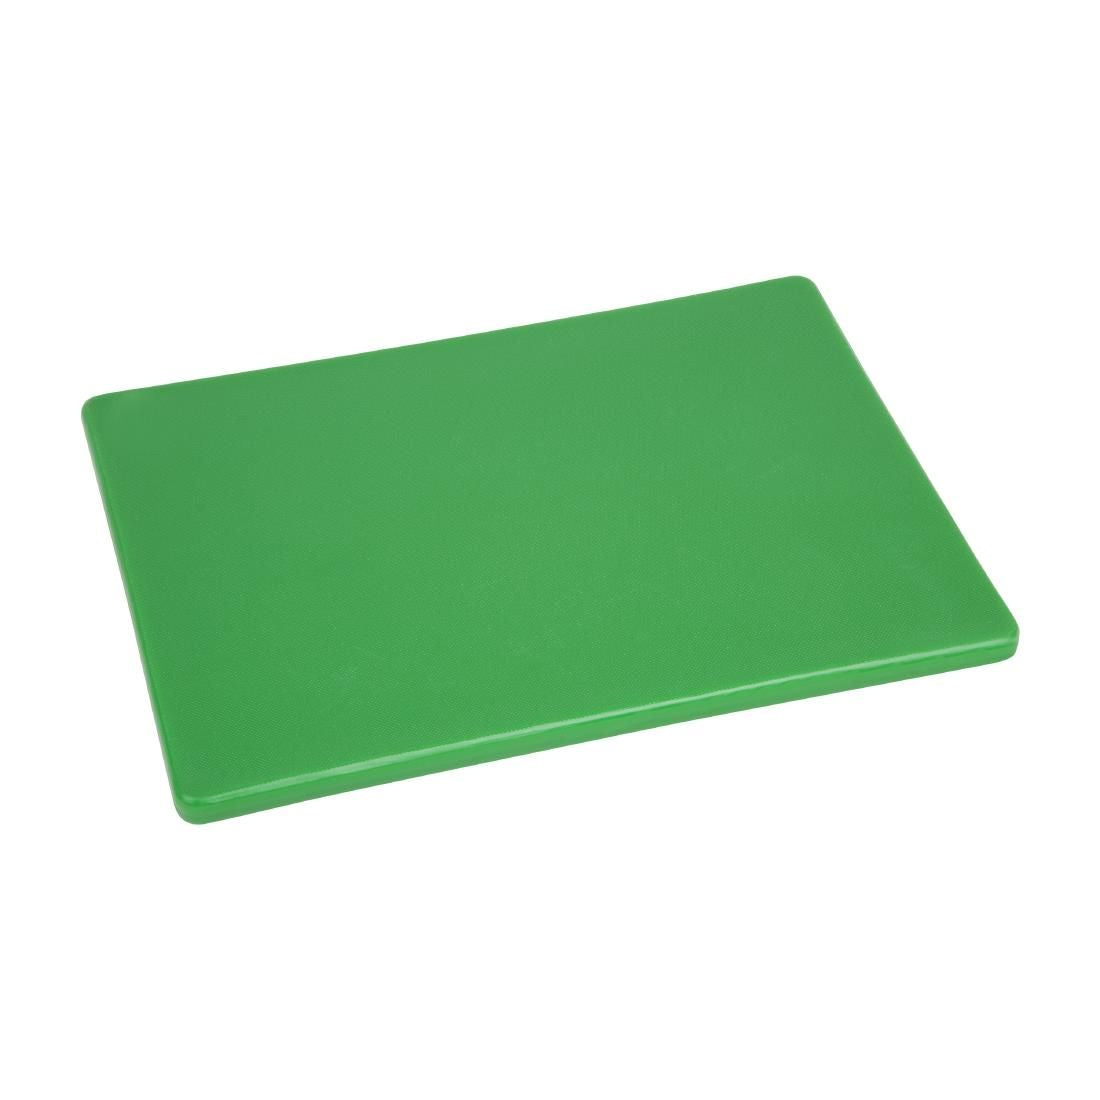 GH793 Hygiplas Low Density Green Chopping Board Small JD Catering Equipment Solutions Ltd